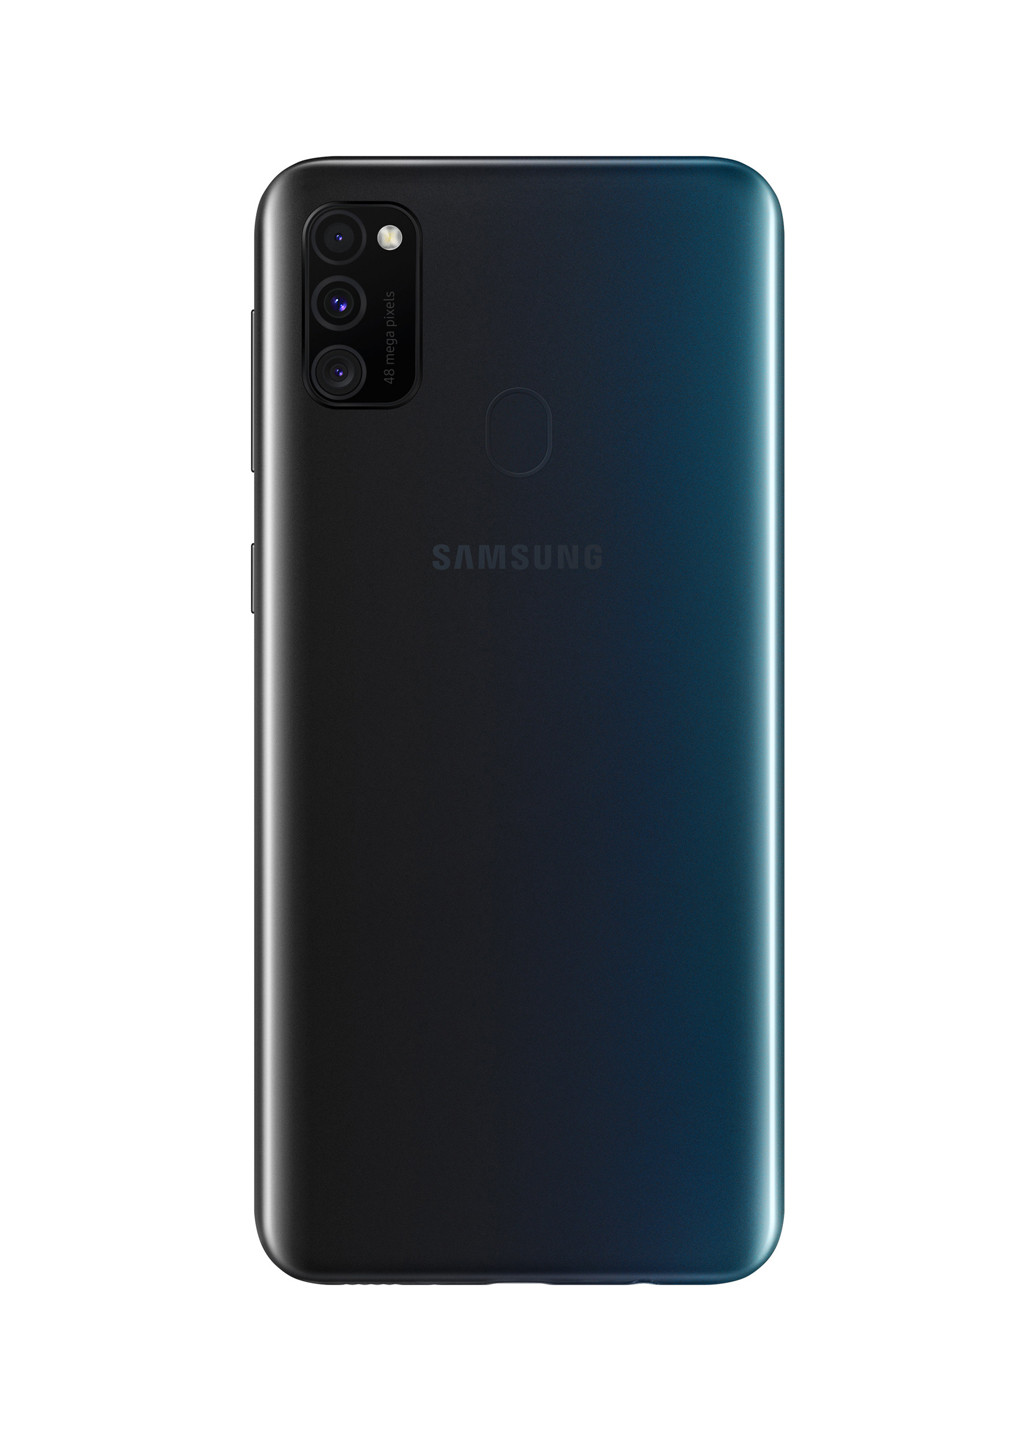 Смартфон Samsung Galaxy M30s 4/64GB Opal Black (SM-M307FZKUSEK) чёрный